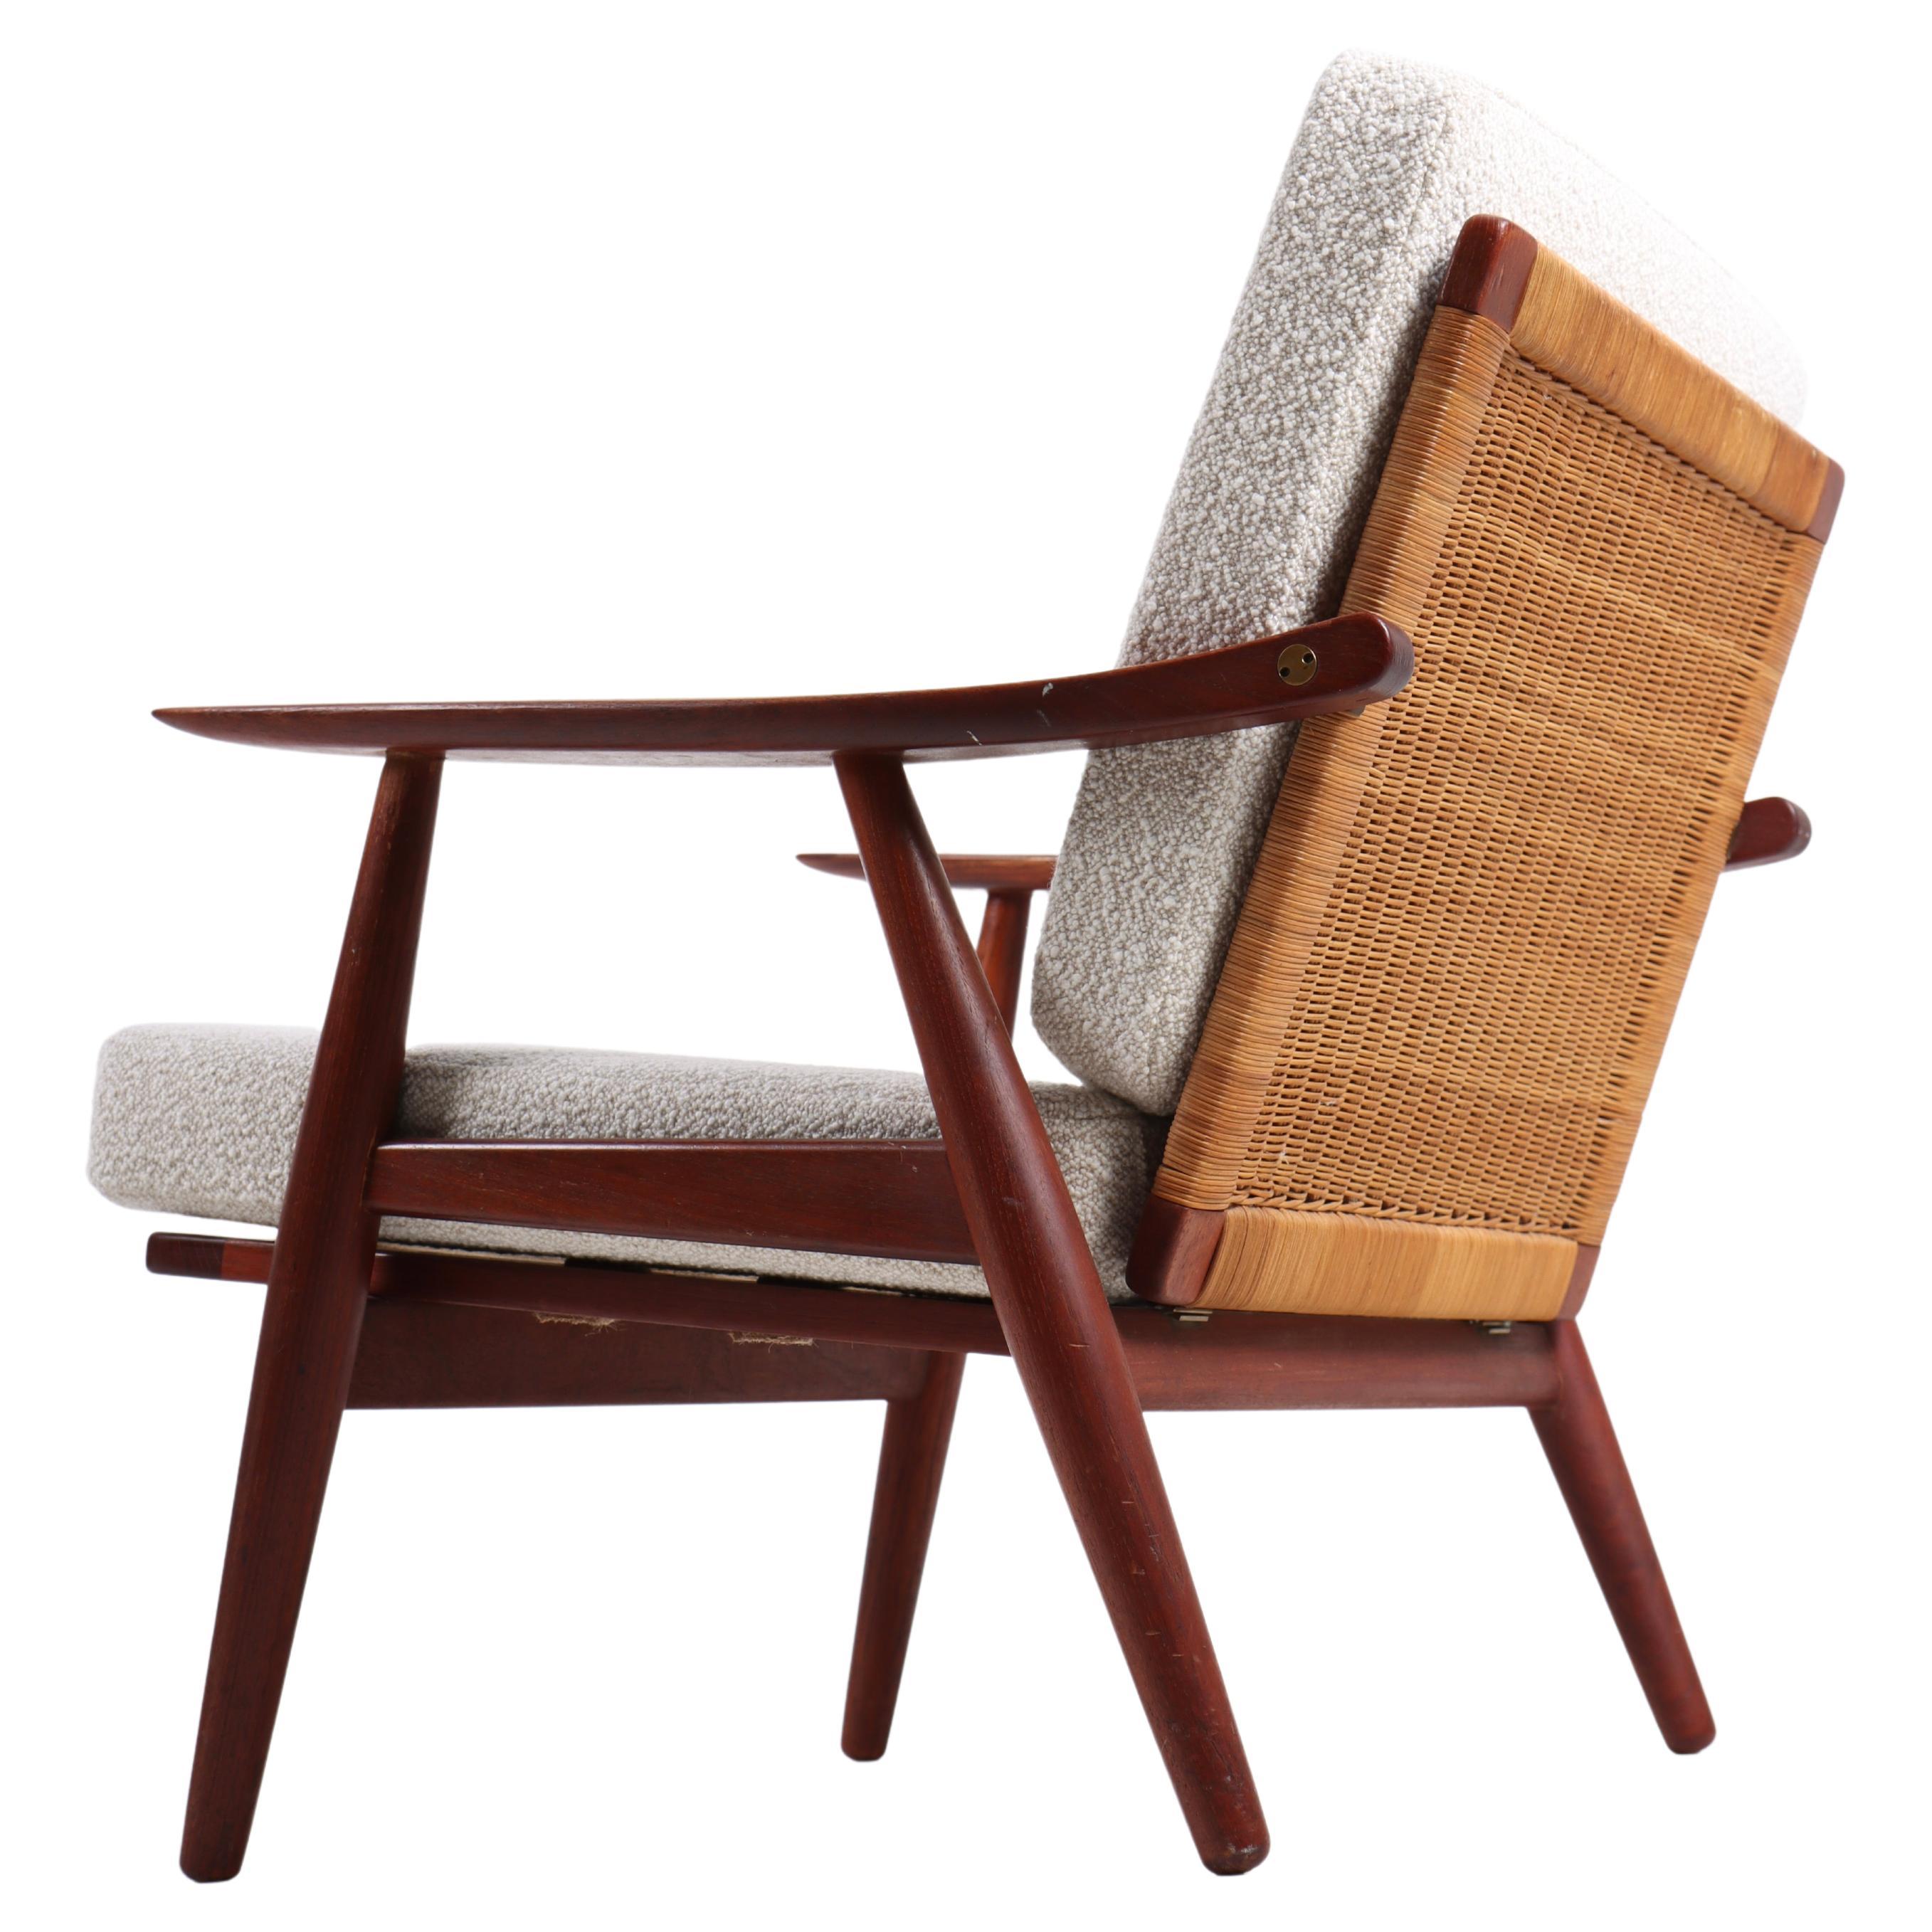 Scandinavian Modern Danish Modern Lounge Chair in Teak and Cane by Hans Wegner by GETAMA, 1950